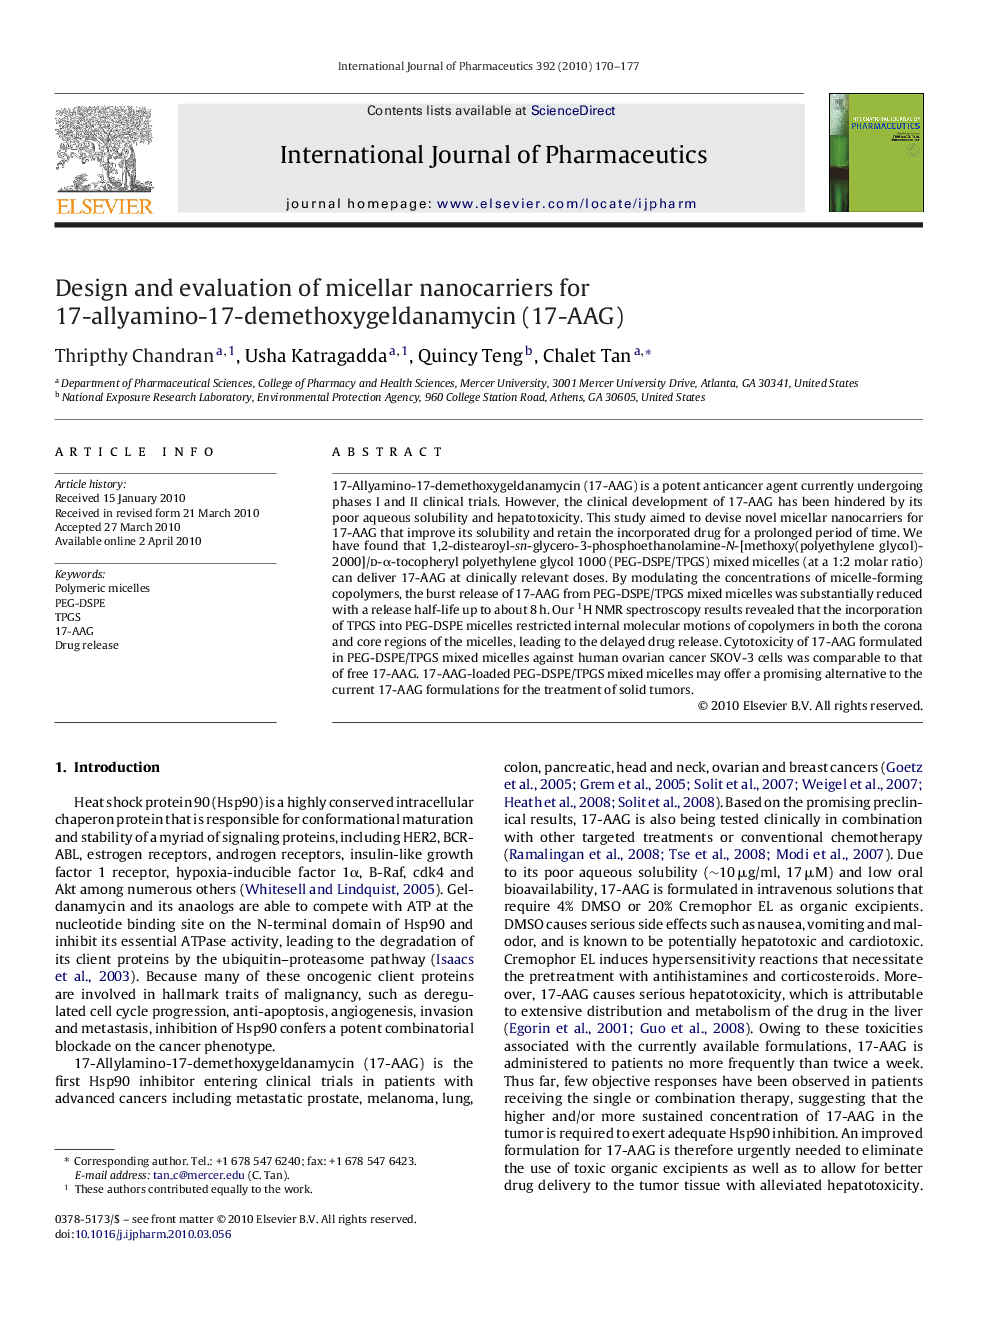 Design and evaluation of micellar nanocarriers for 17-allyamino-17-demethoxygeldanamycin (17-AAG)